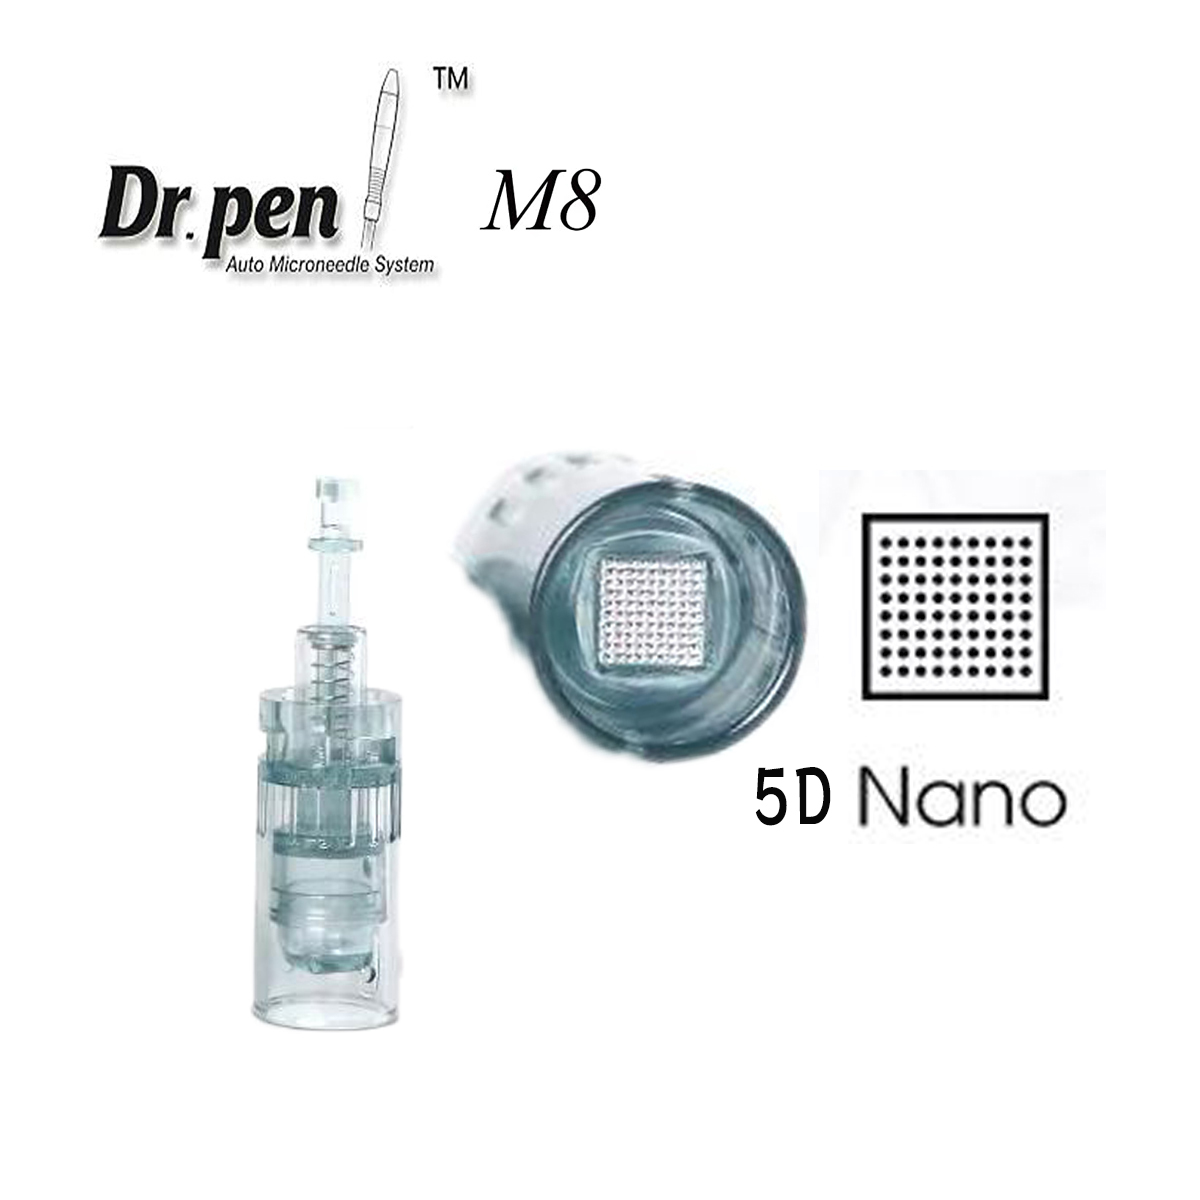 【Dr.pen M8】 【選べるpin5個入り】 16pin, 11pin, 24pin, 36pin, 42pin, nano 5Dnano  選べるpin5個入り ダーマペン ドクターペン 替チップ 全種類 ナノ 電動ダーマスタンプ替えチップ ダーマペン | hanarey